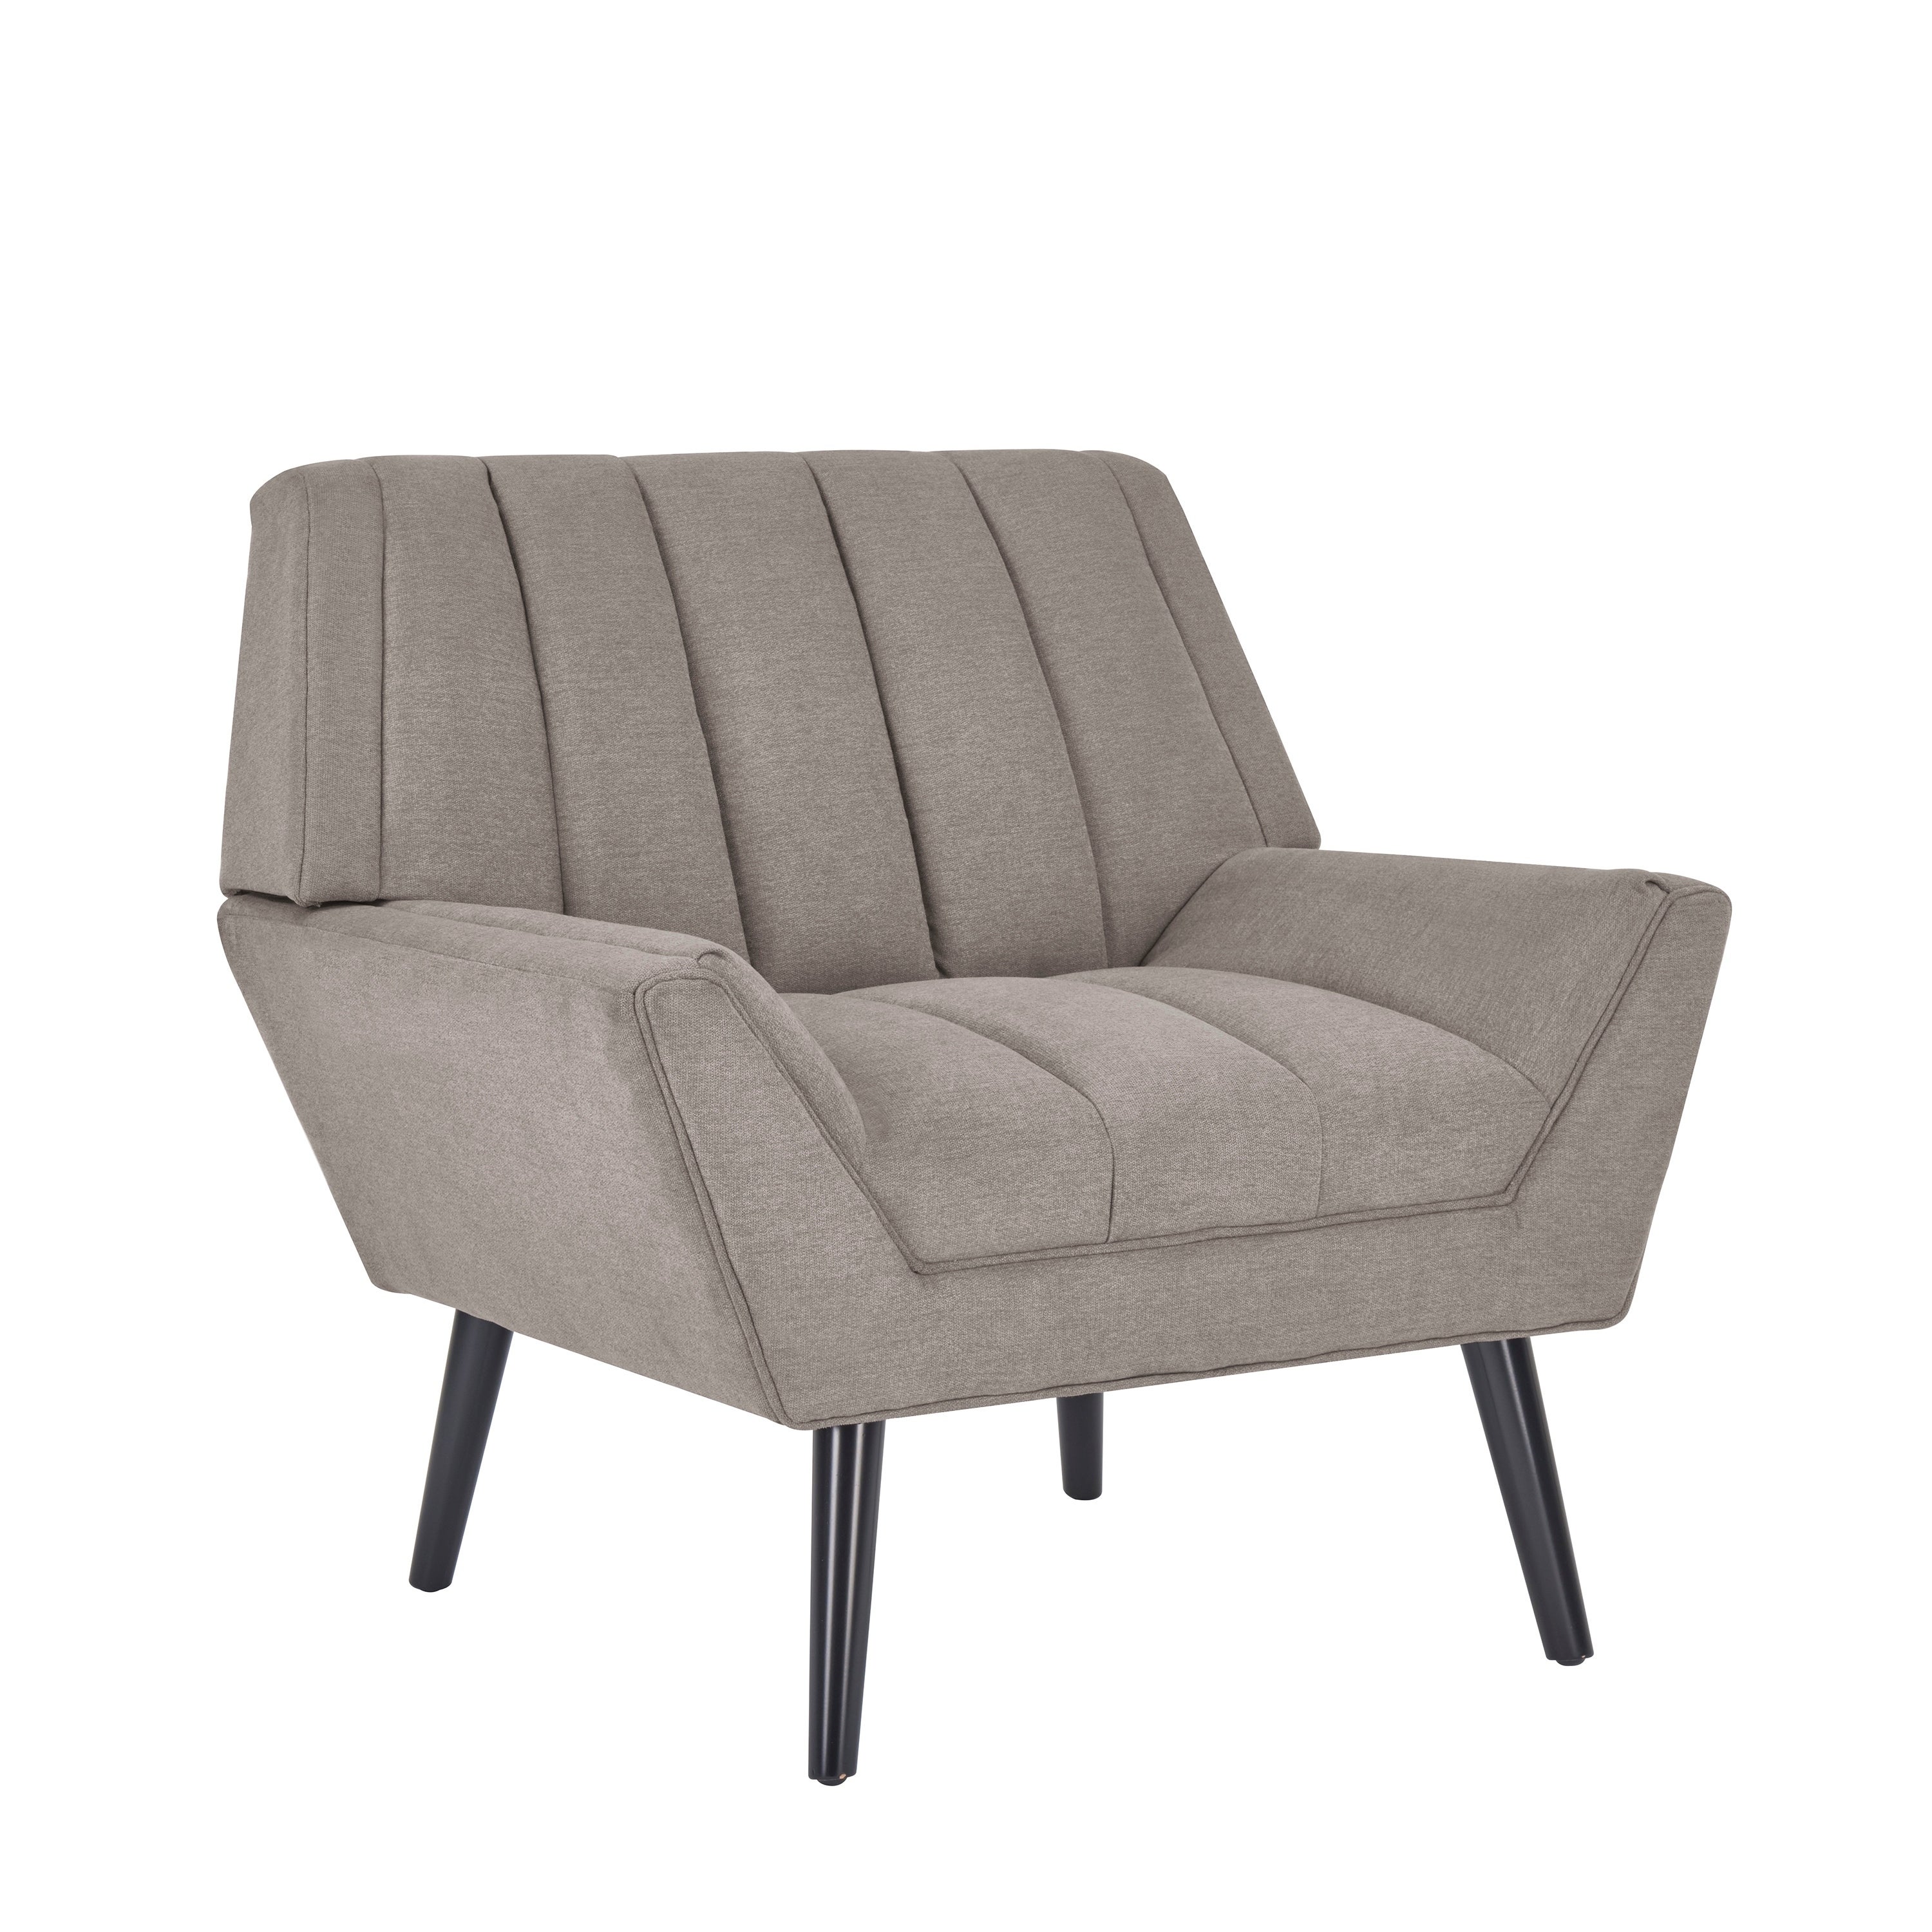 100days Kingbird Furniture Company Brand Green Sectional Sofa Manufacture 8